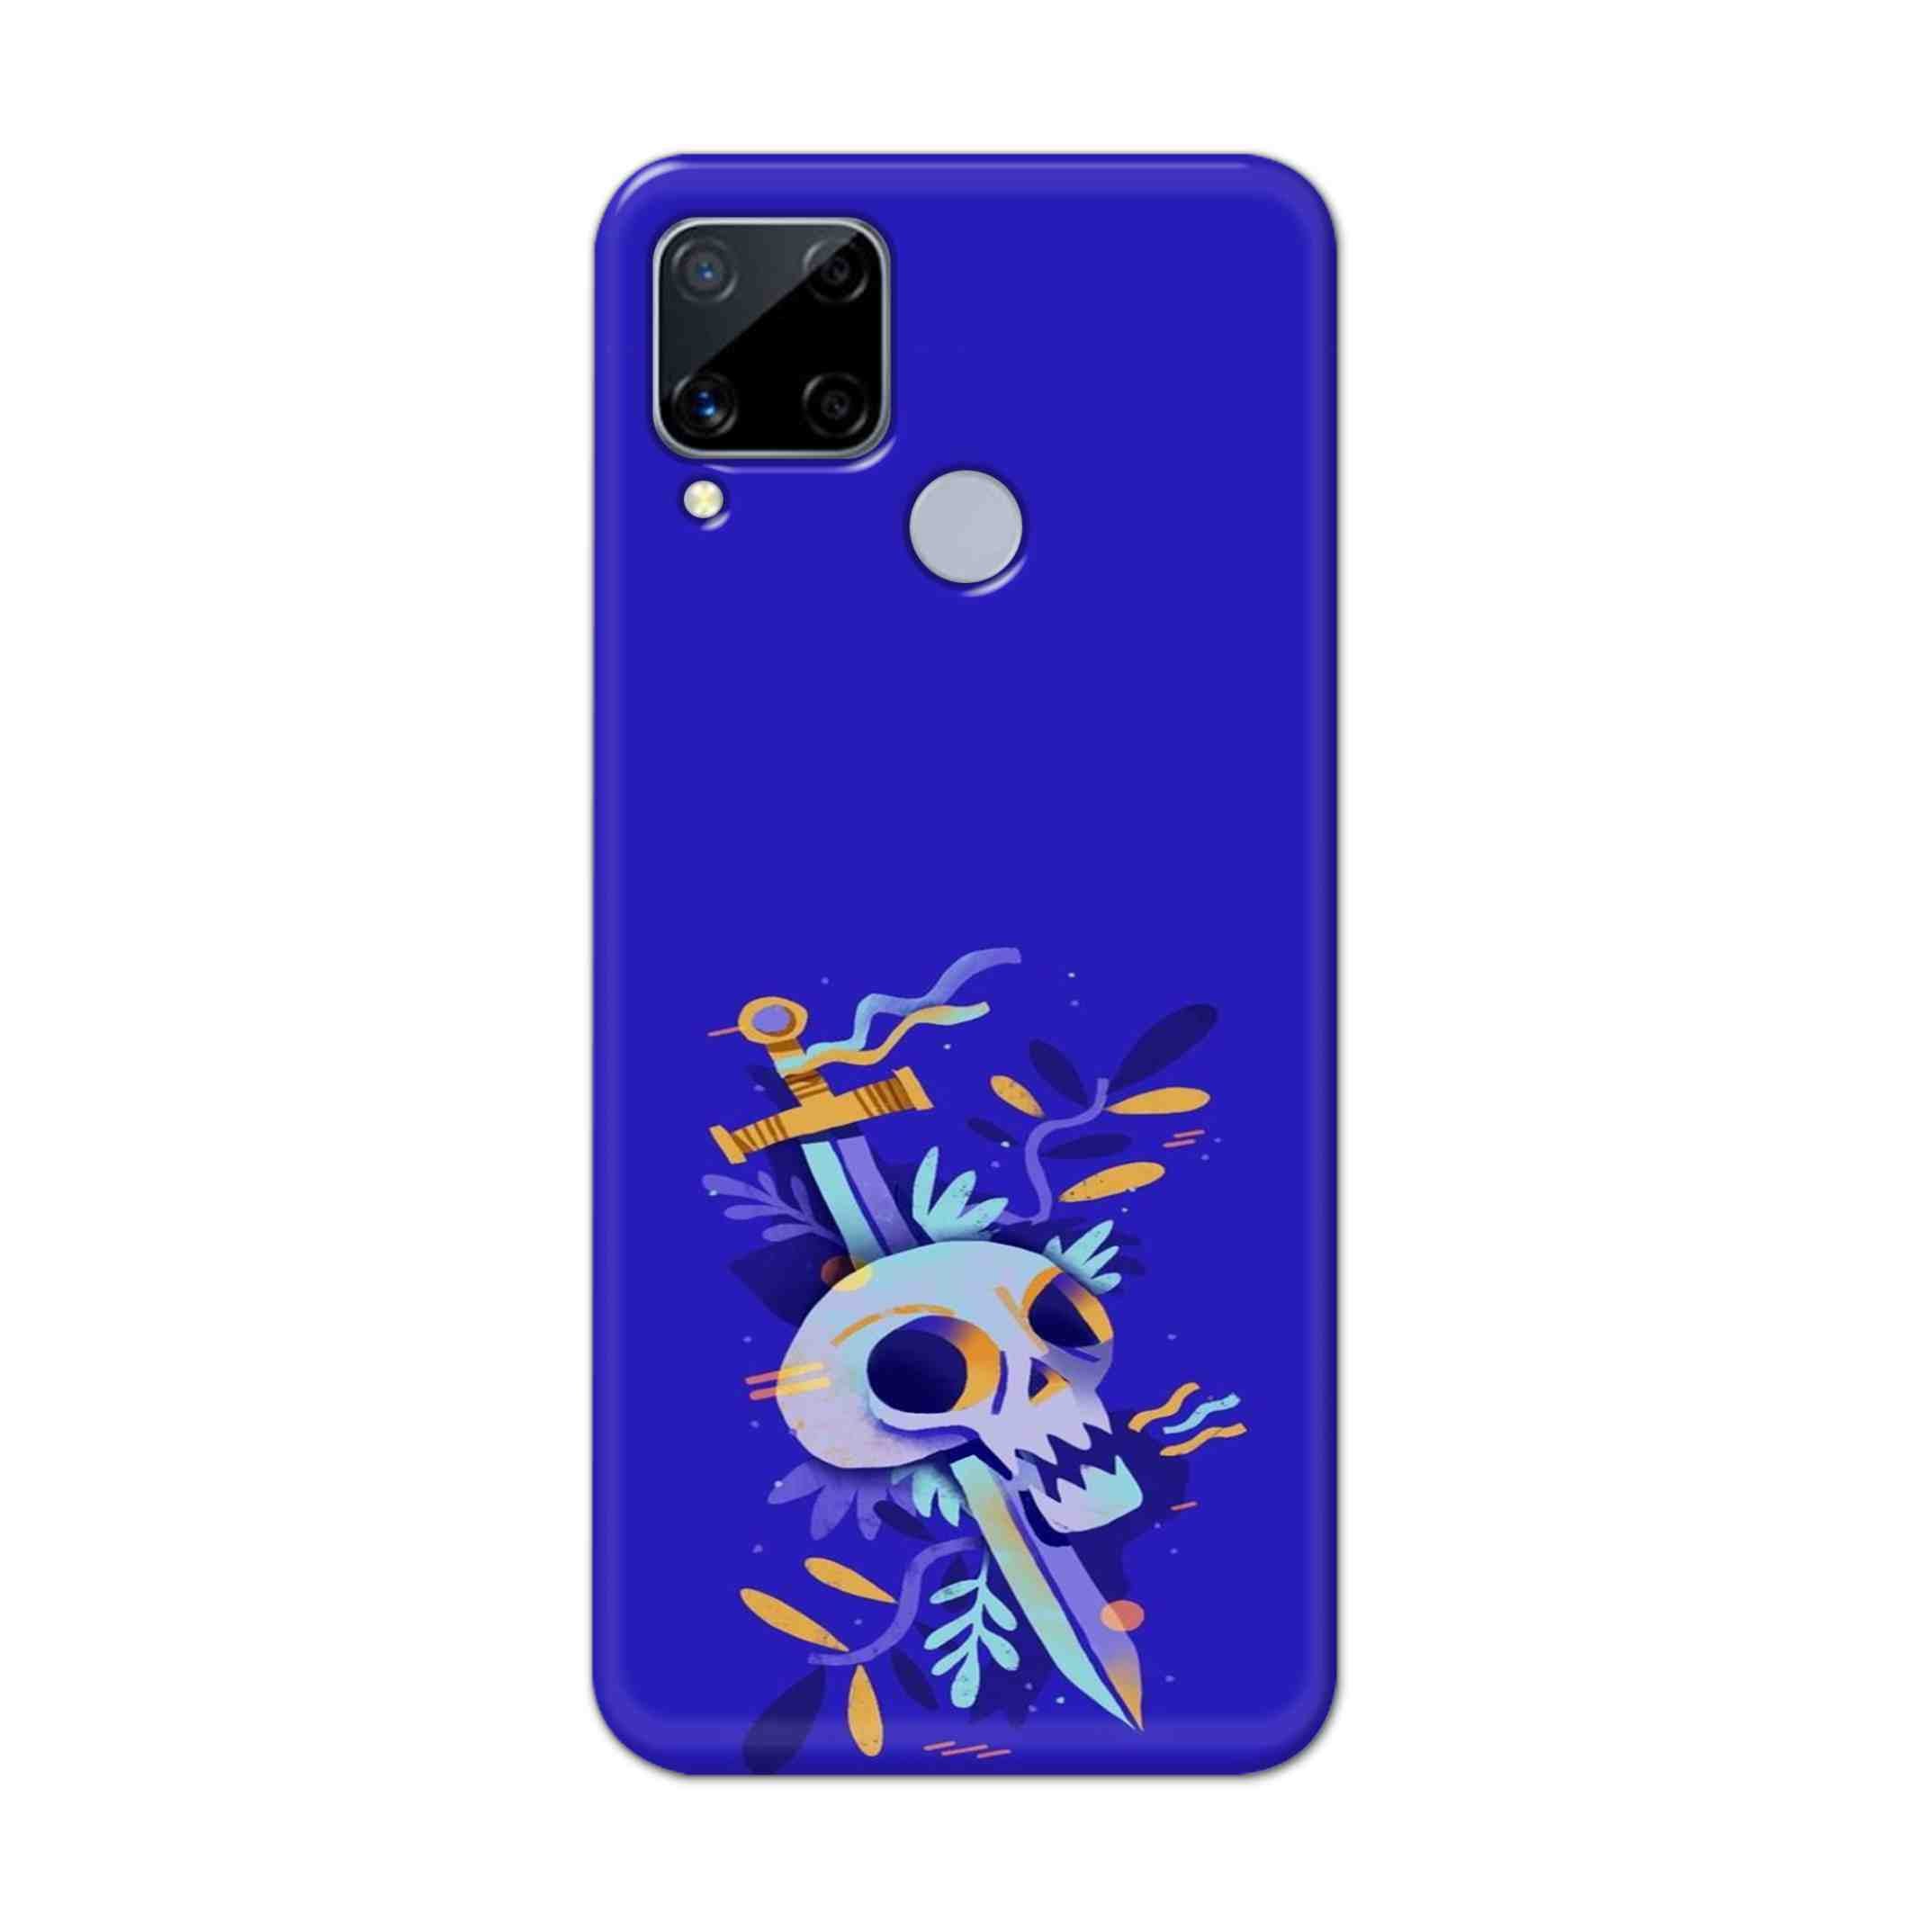 Buy Blue Skull Hard Back Mobile Phone Case Cover For Realme C15 Online